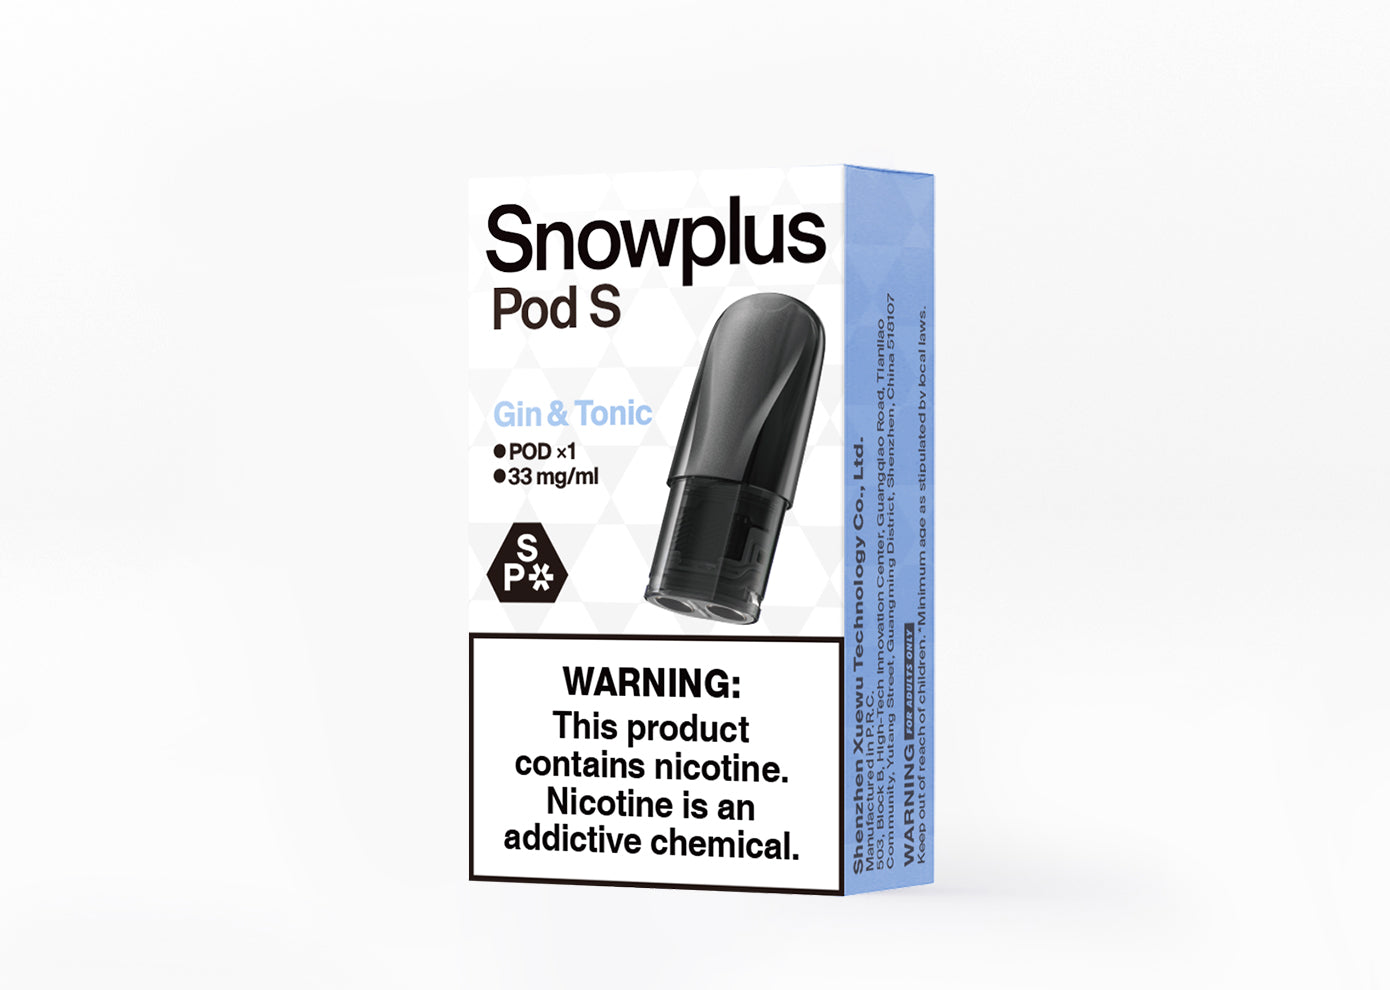 Snowplus Pods S